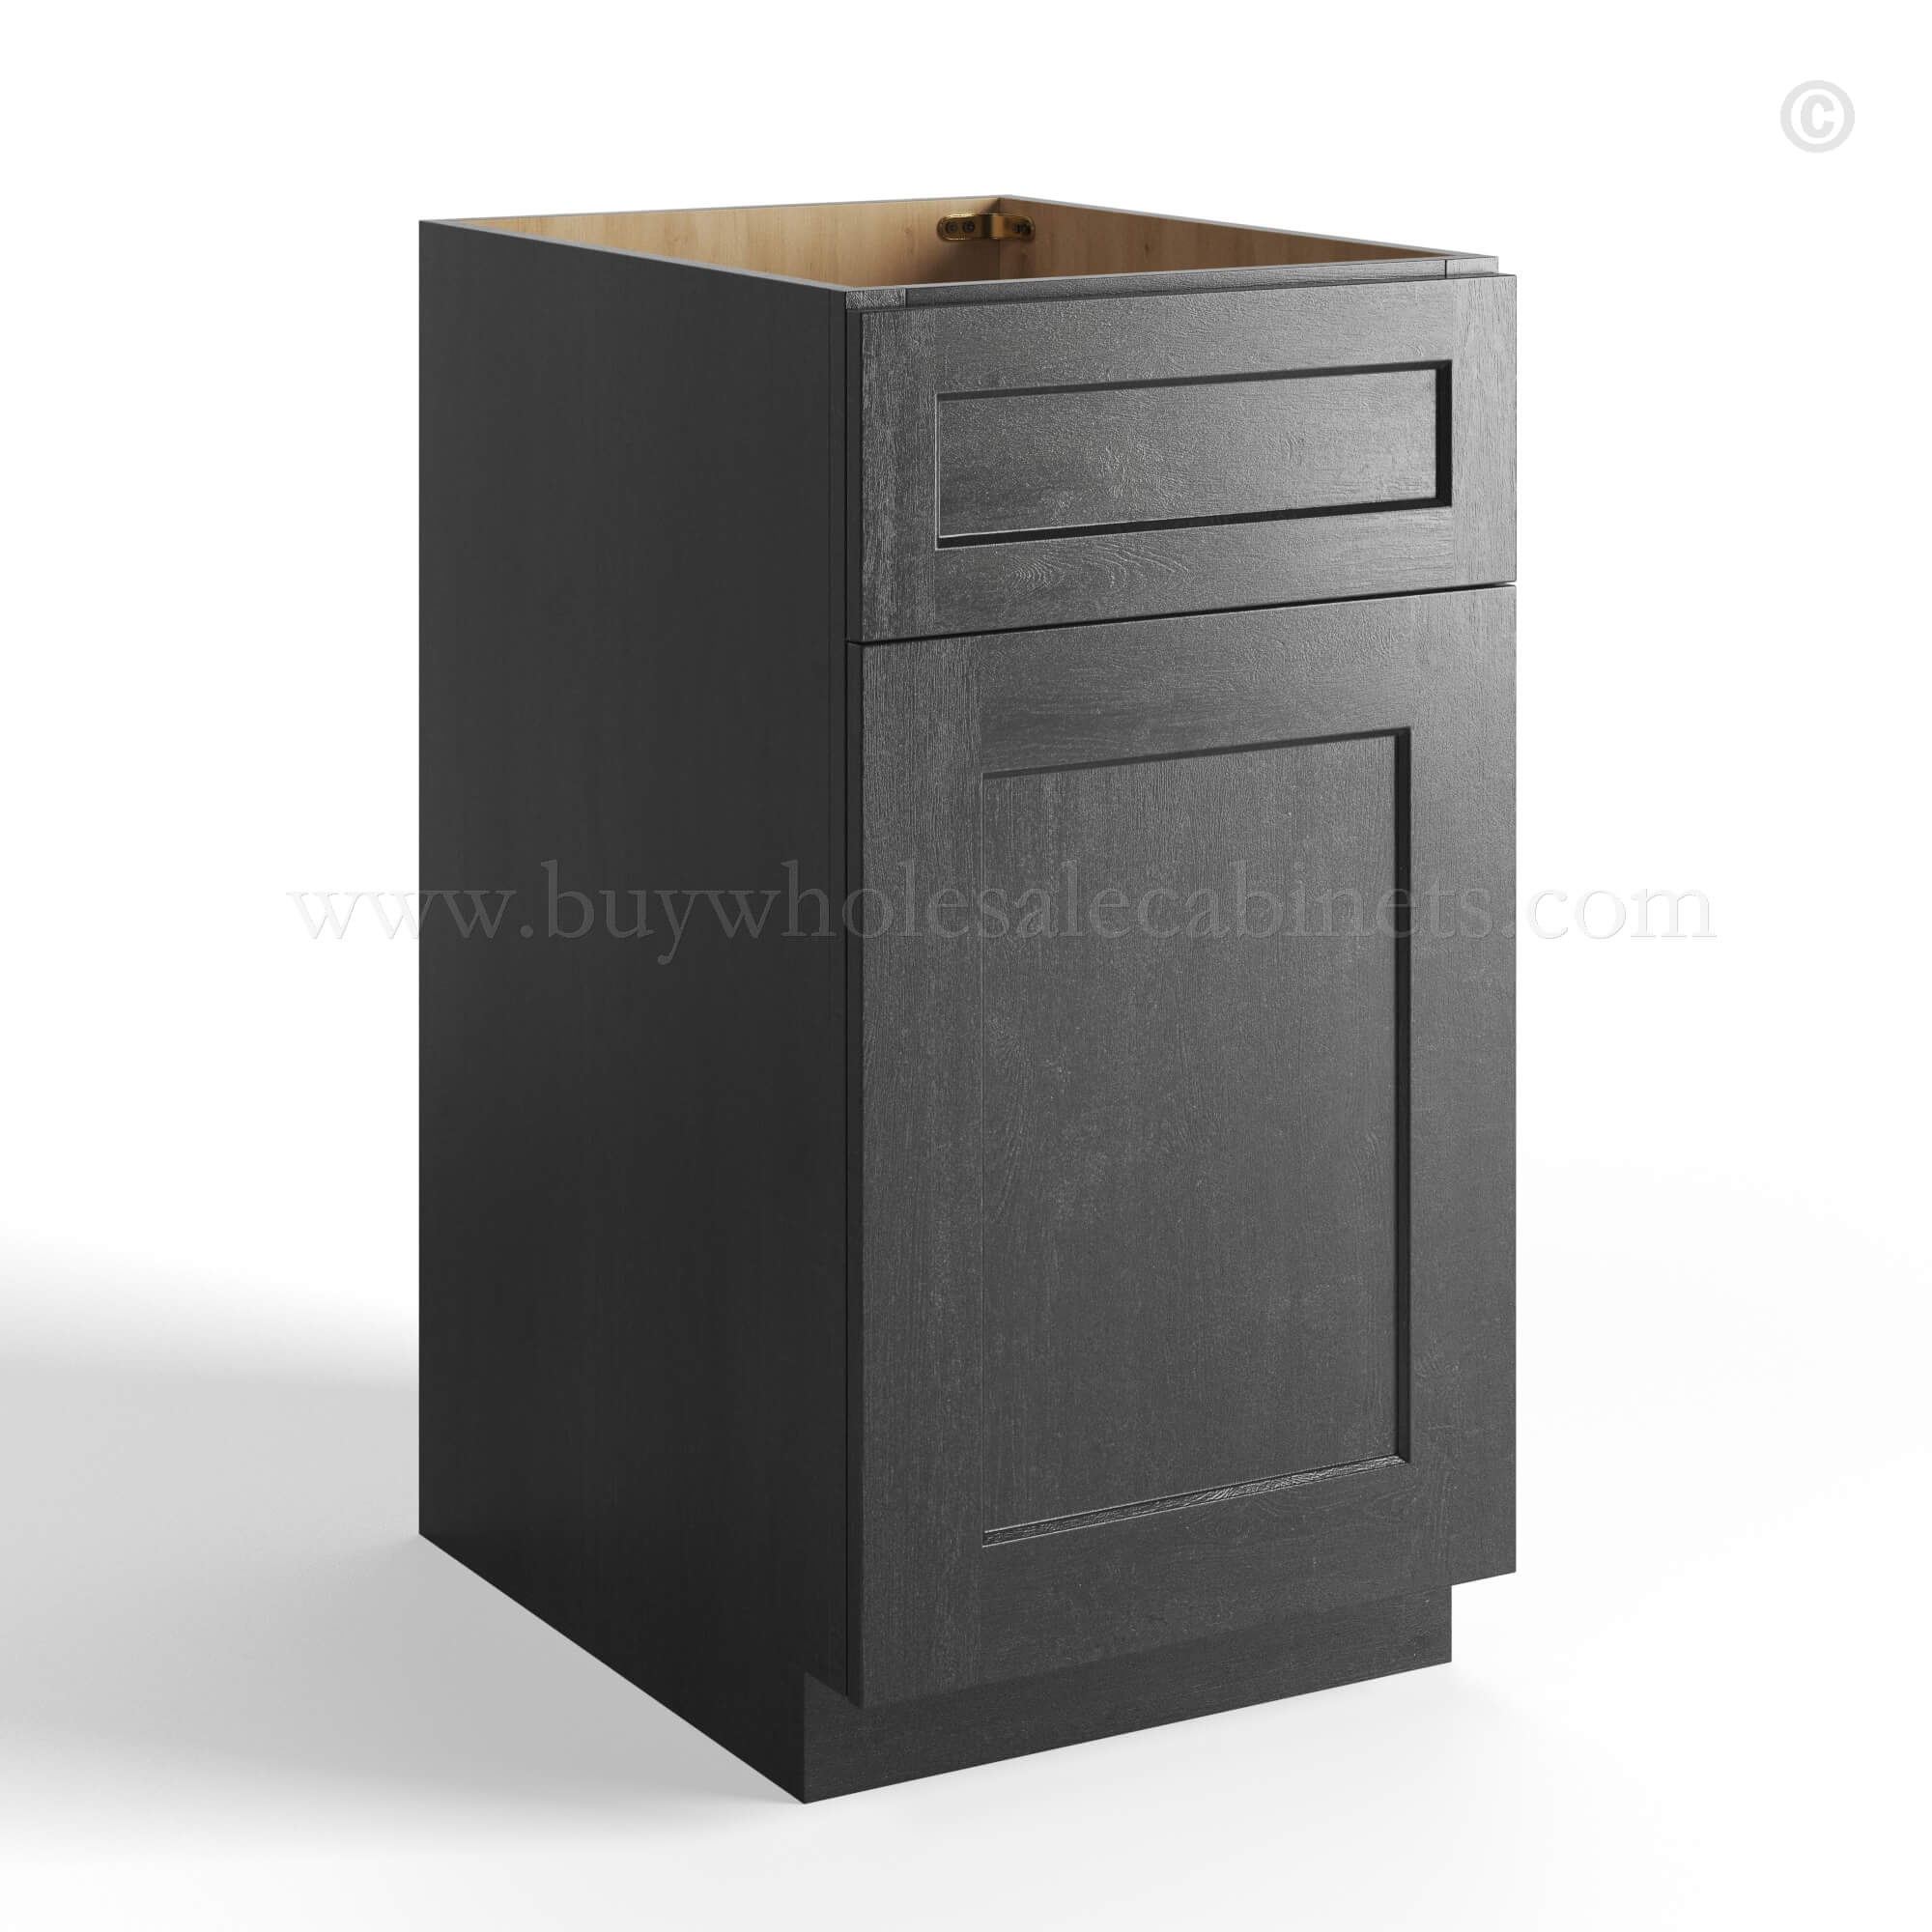 Charcoal Black Shaker Base Trash Cabinet, rta cabinets, wholesale cabinets